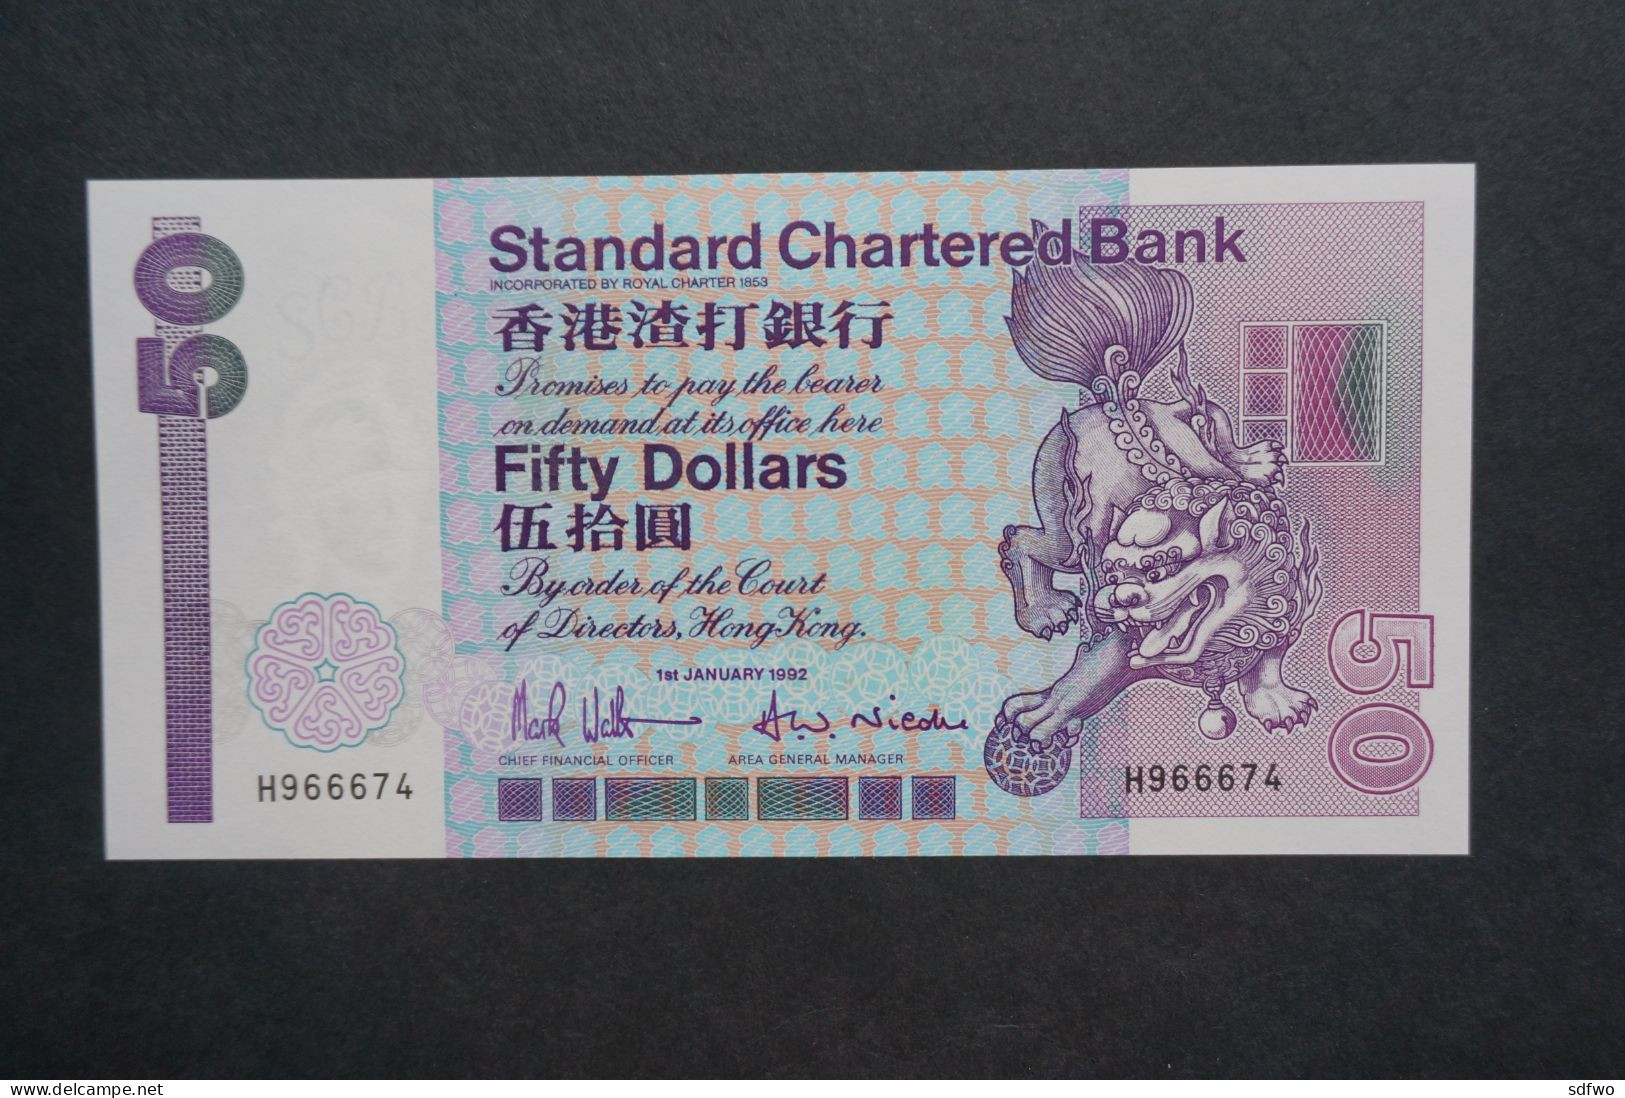 (Tv) 1992 Hong Kong Issue - Standard Chartered Bank 50 DOLLARS ($50)  #H966674 - Hong Kong